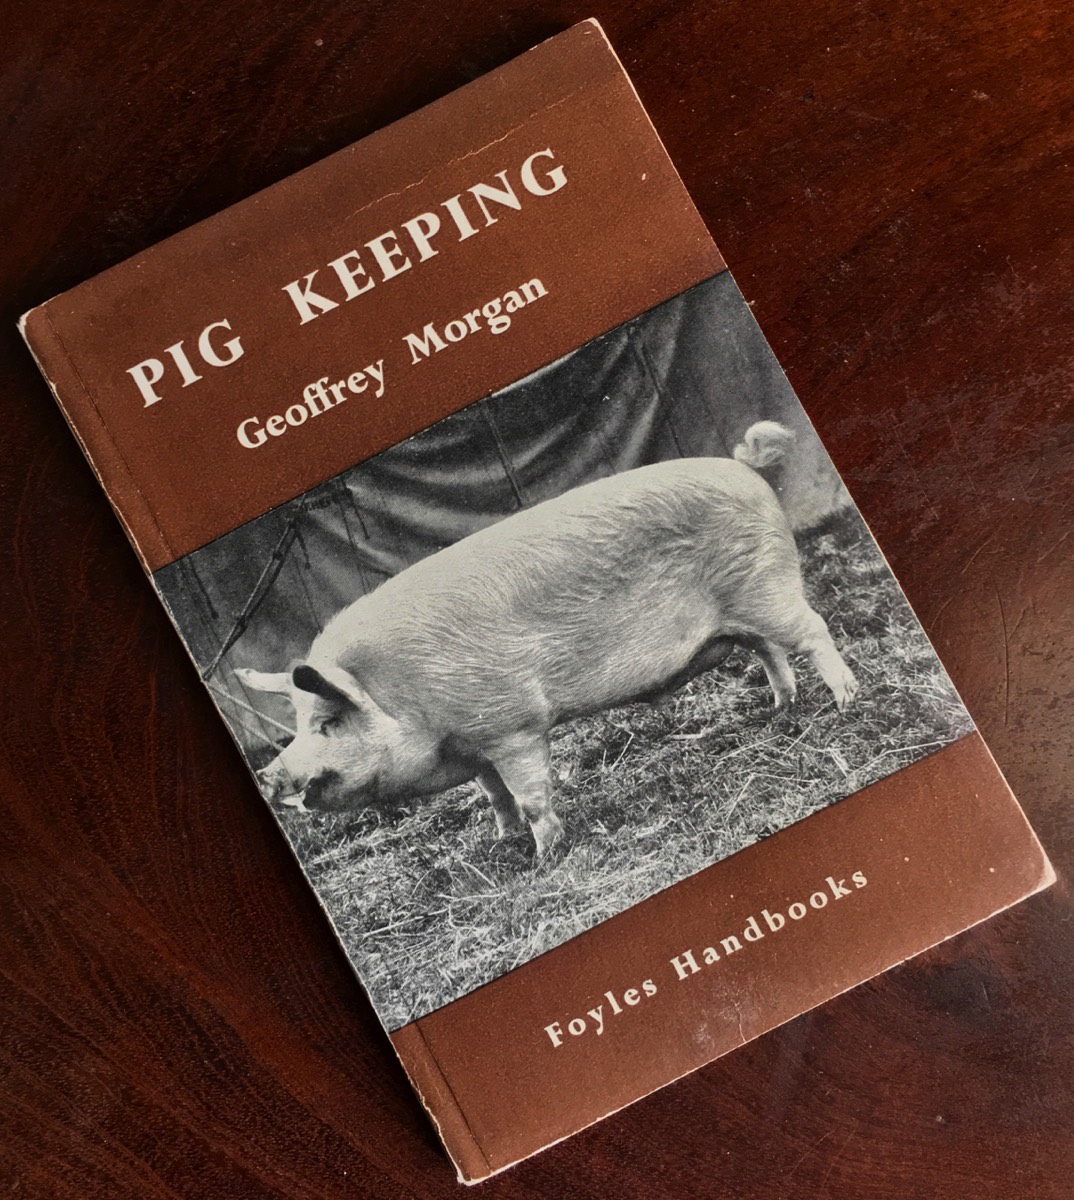 Pig Keeping by Geoffrey Morgan